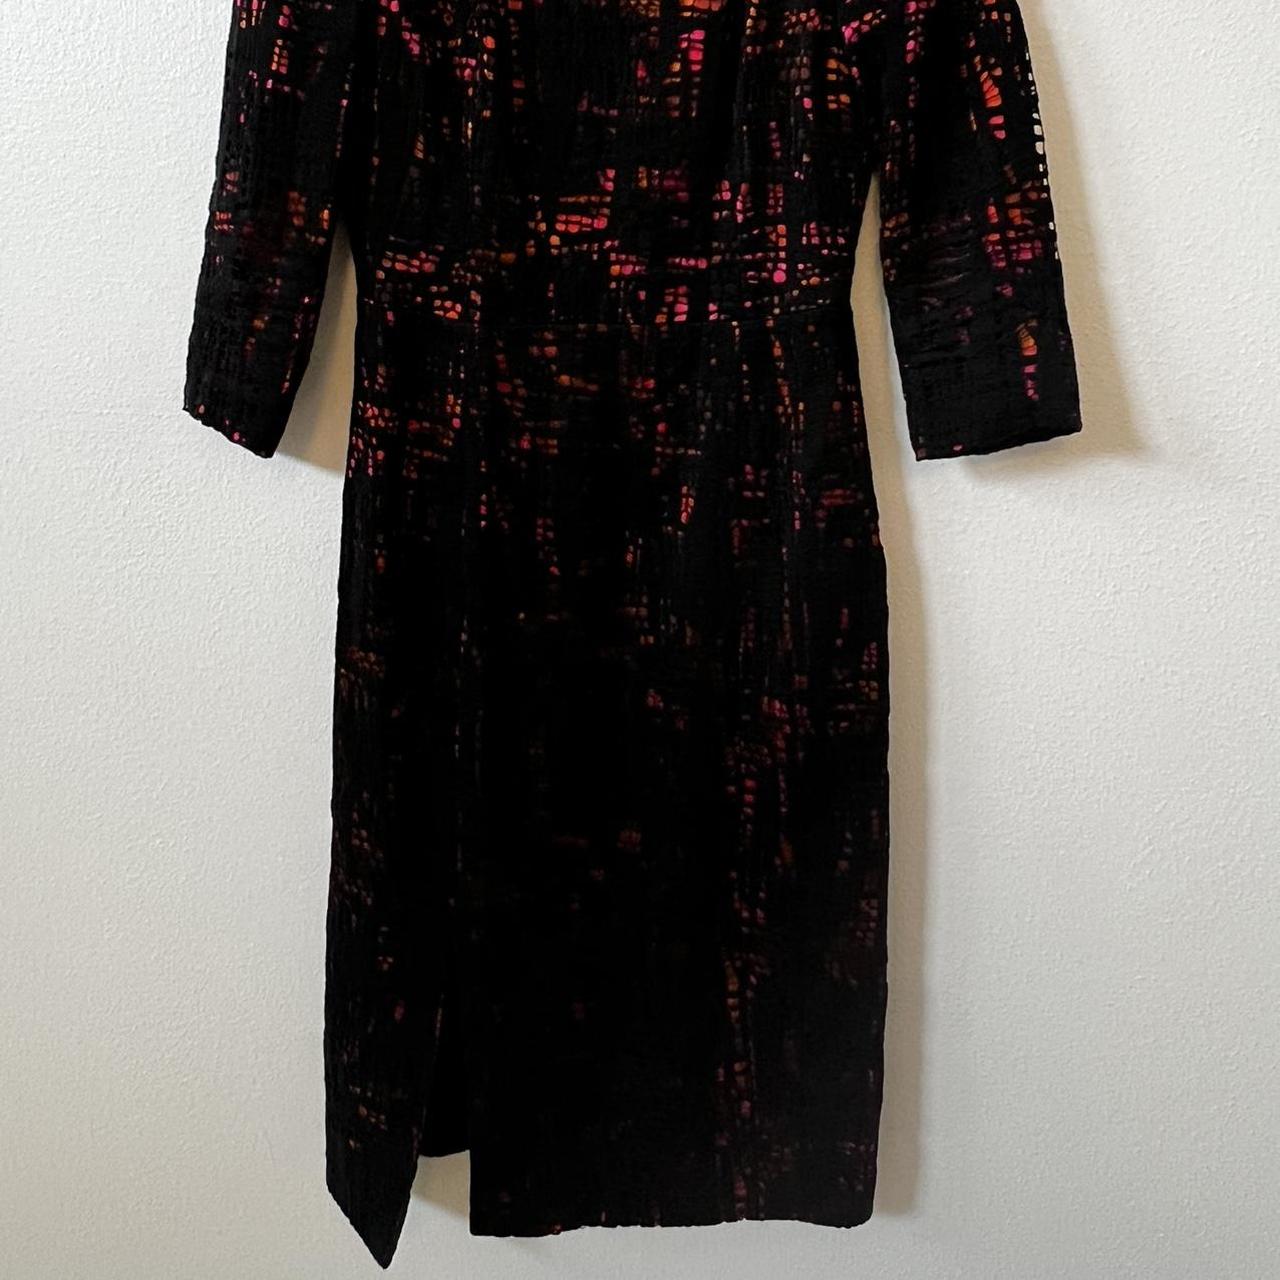 Erdem Women's Red and Black Dress (2)